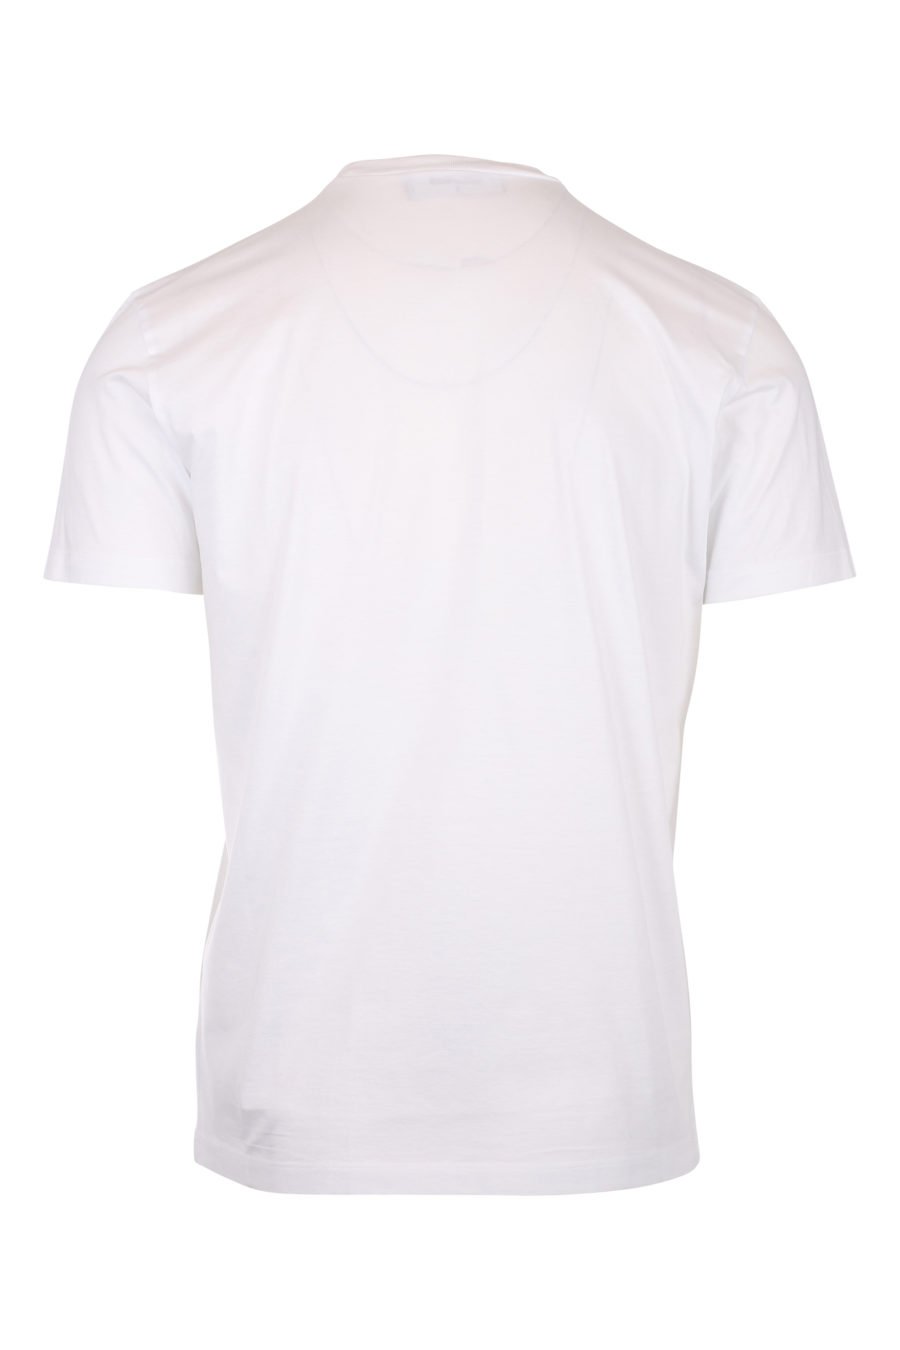 Camiseta blanca con logo pequeño ceresio 9 - IMG 9778 1